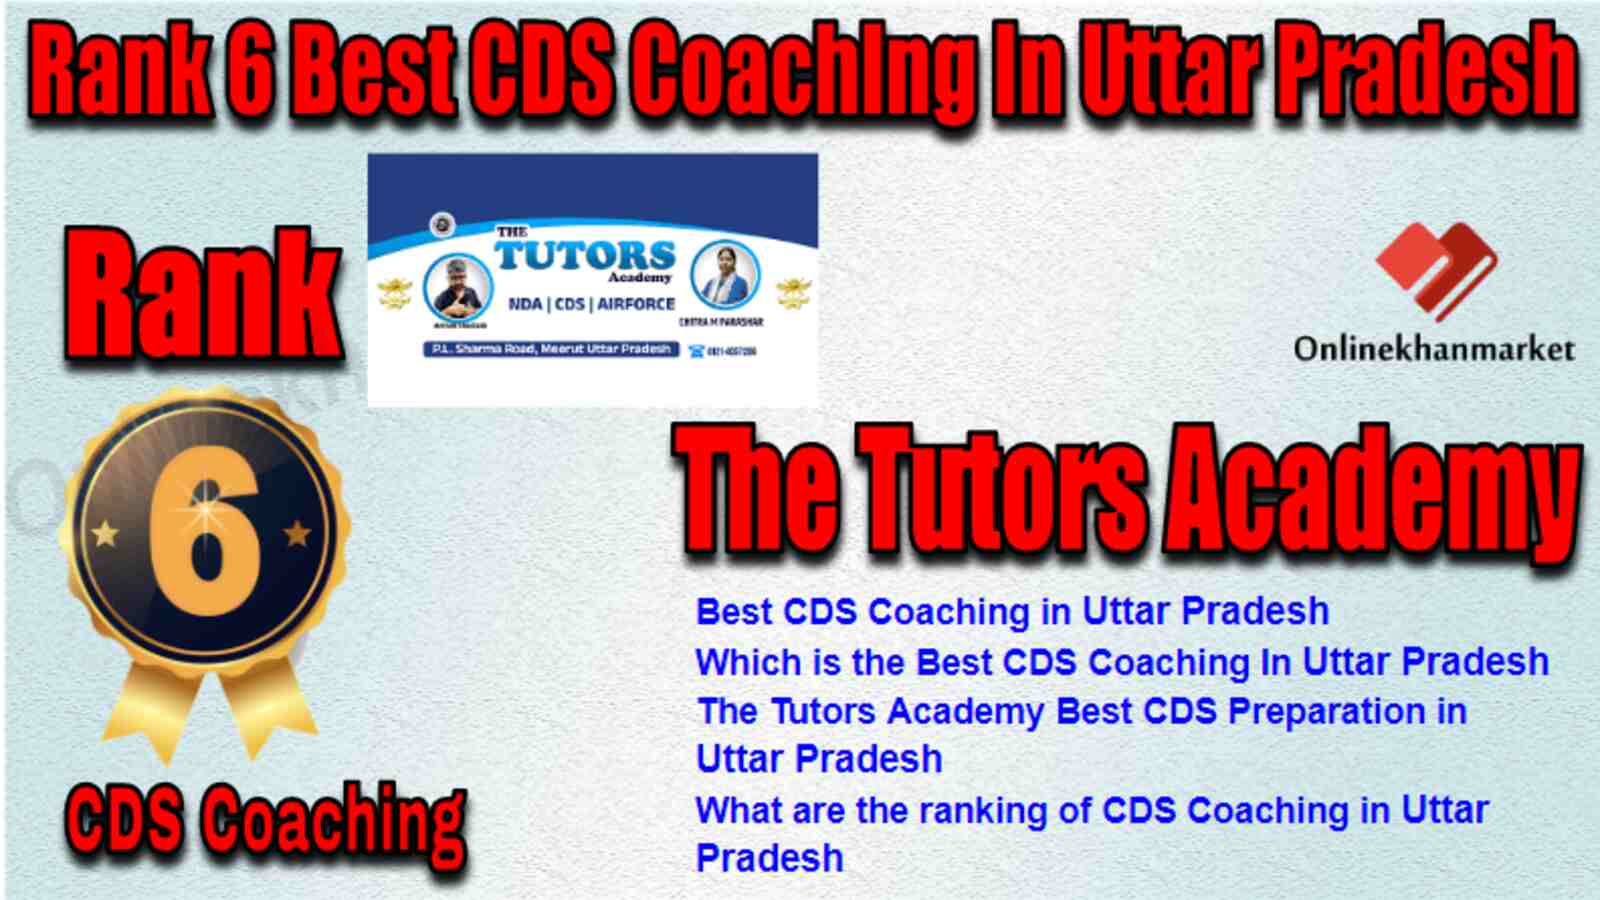 Rank 6 Best CDS Coaching in Uttar Pradesh